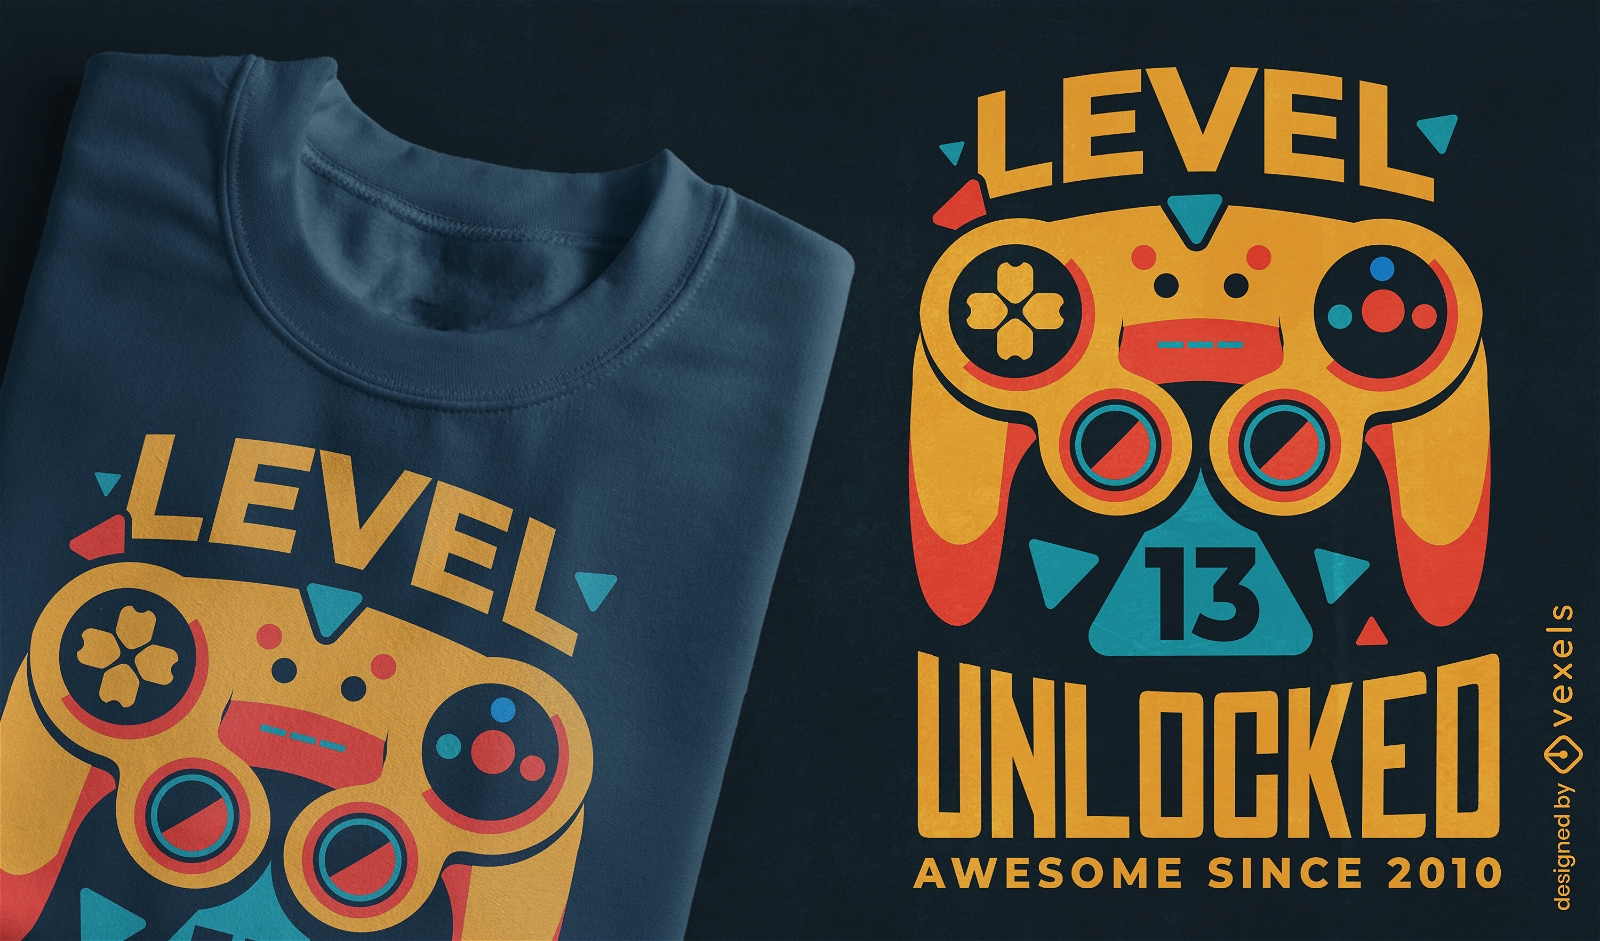 Joystick level 13 gaming t-shirt design